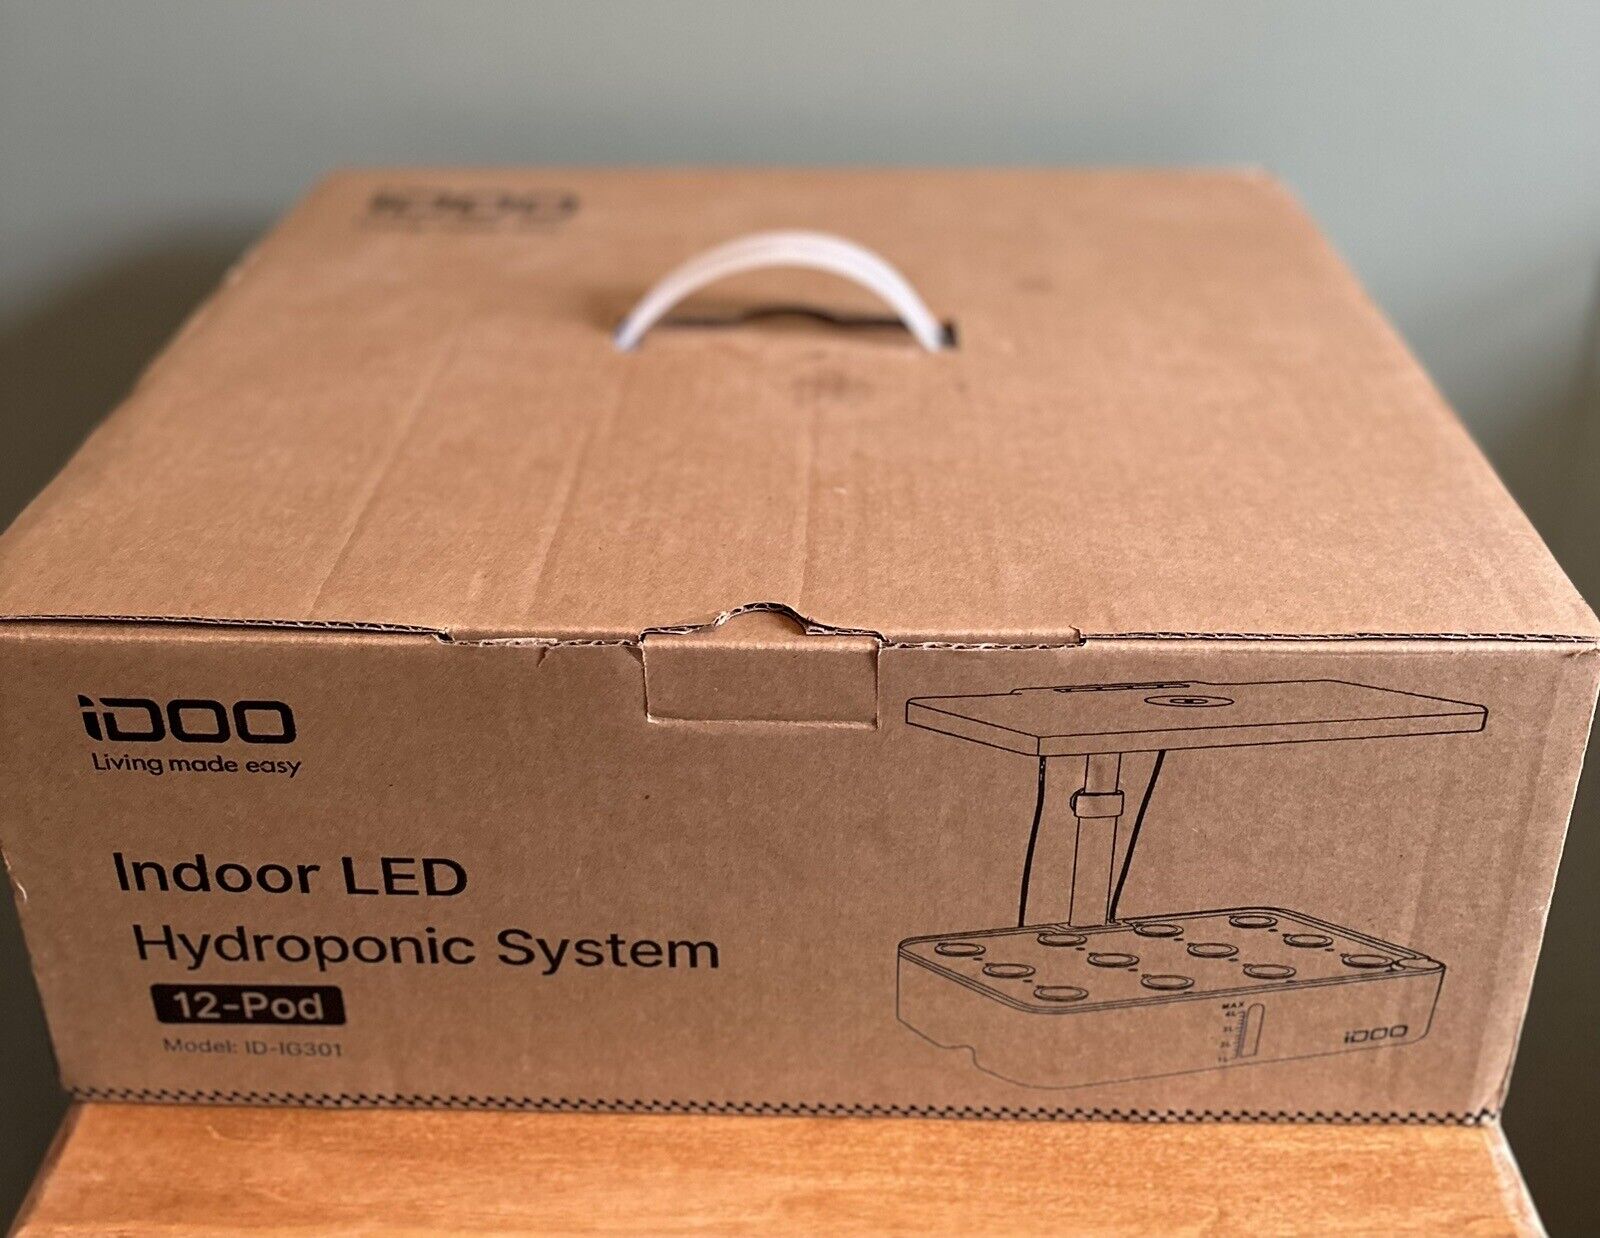 IDOO Indoor LED Hydroponic System 12 Pod Model ID-IG301 New Open Box Plant/Herbs